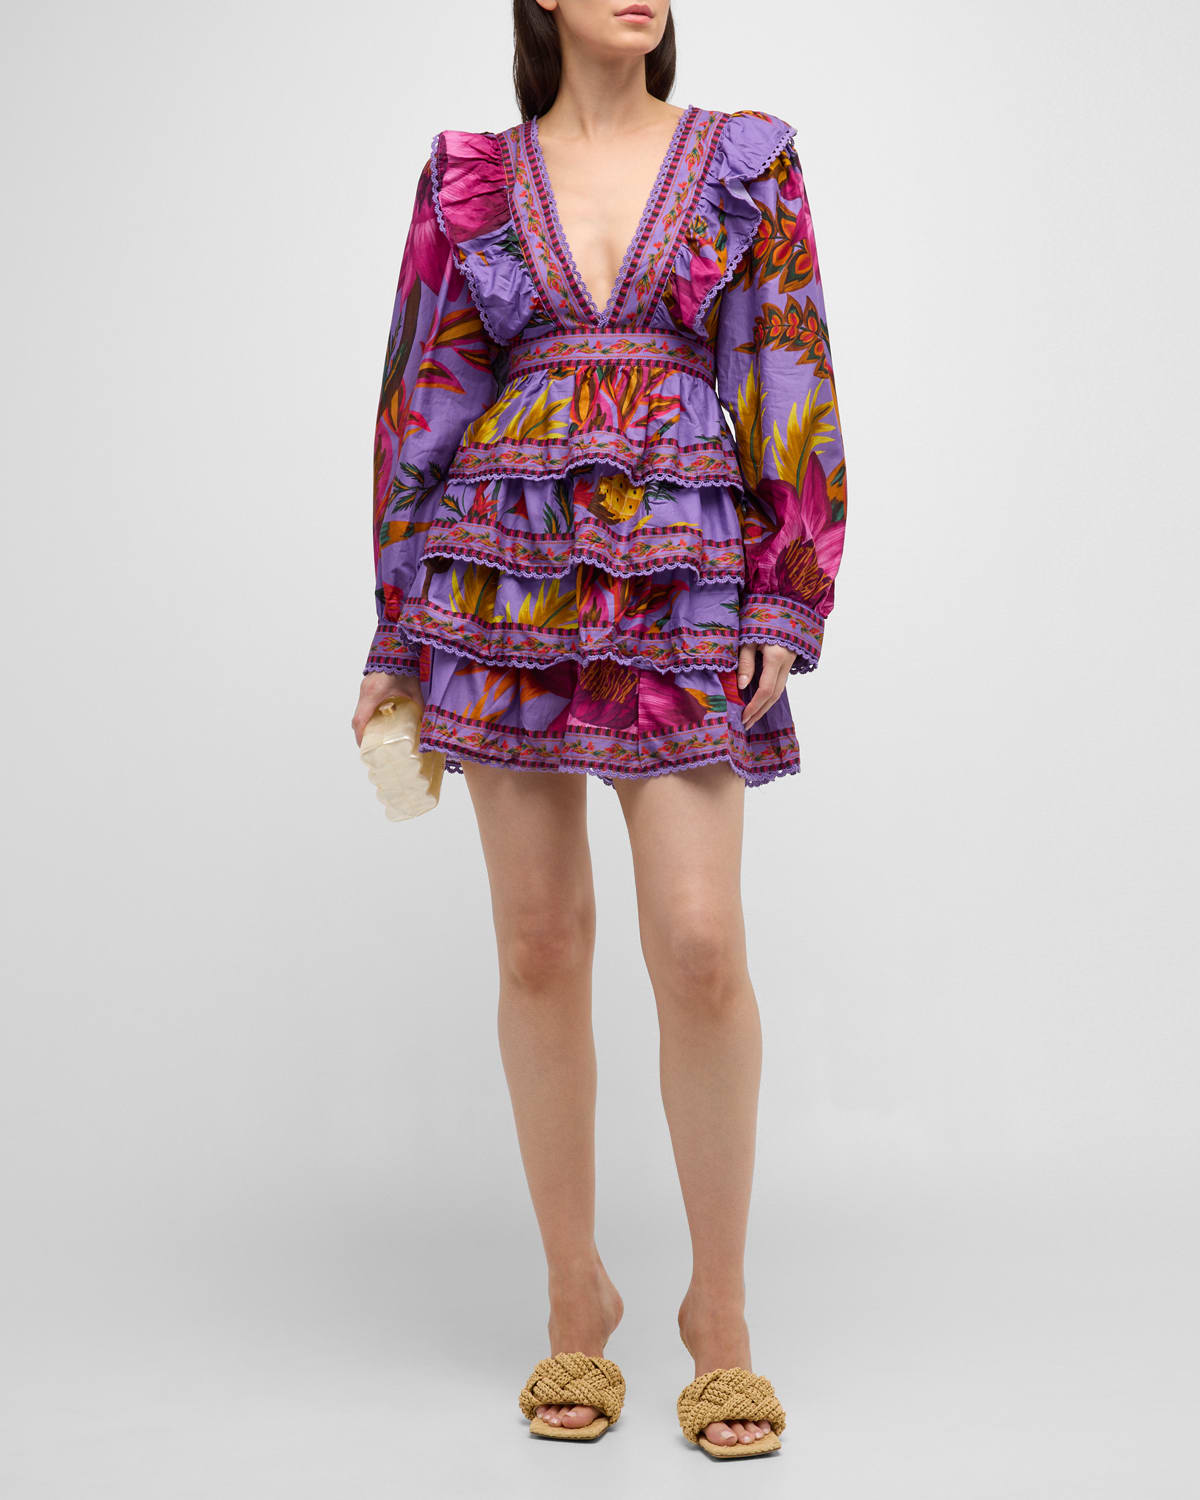 Plunging V Neckline Dress | Neiman Marcus